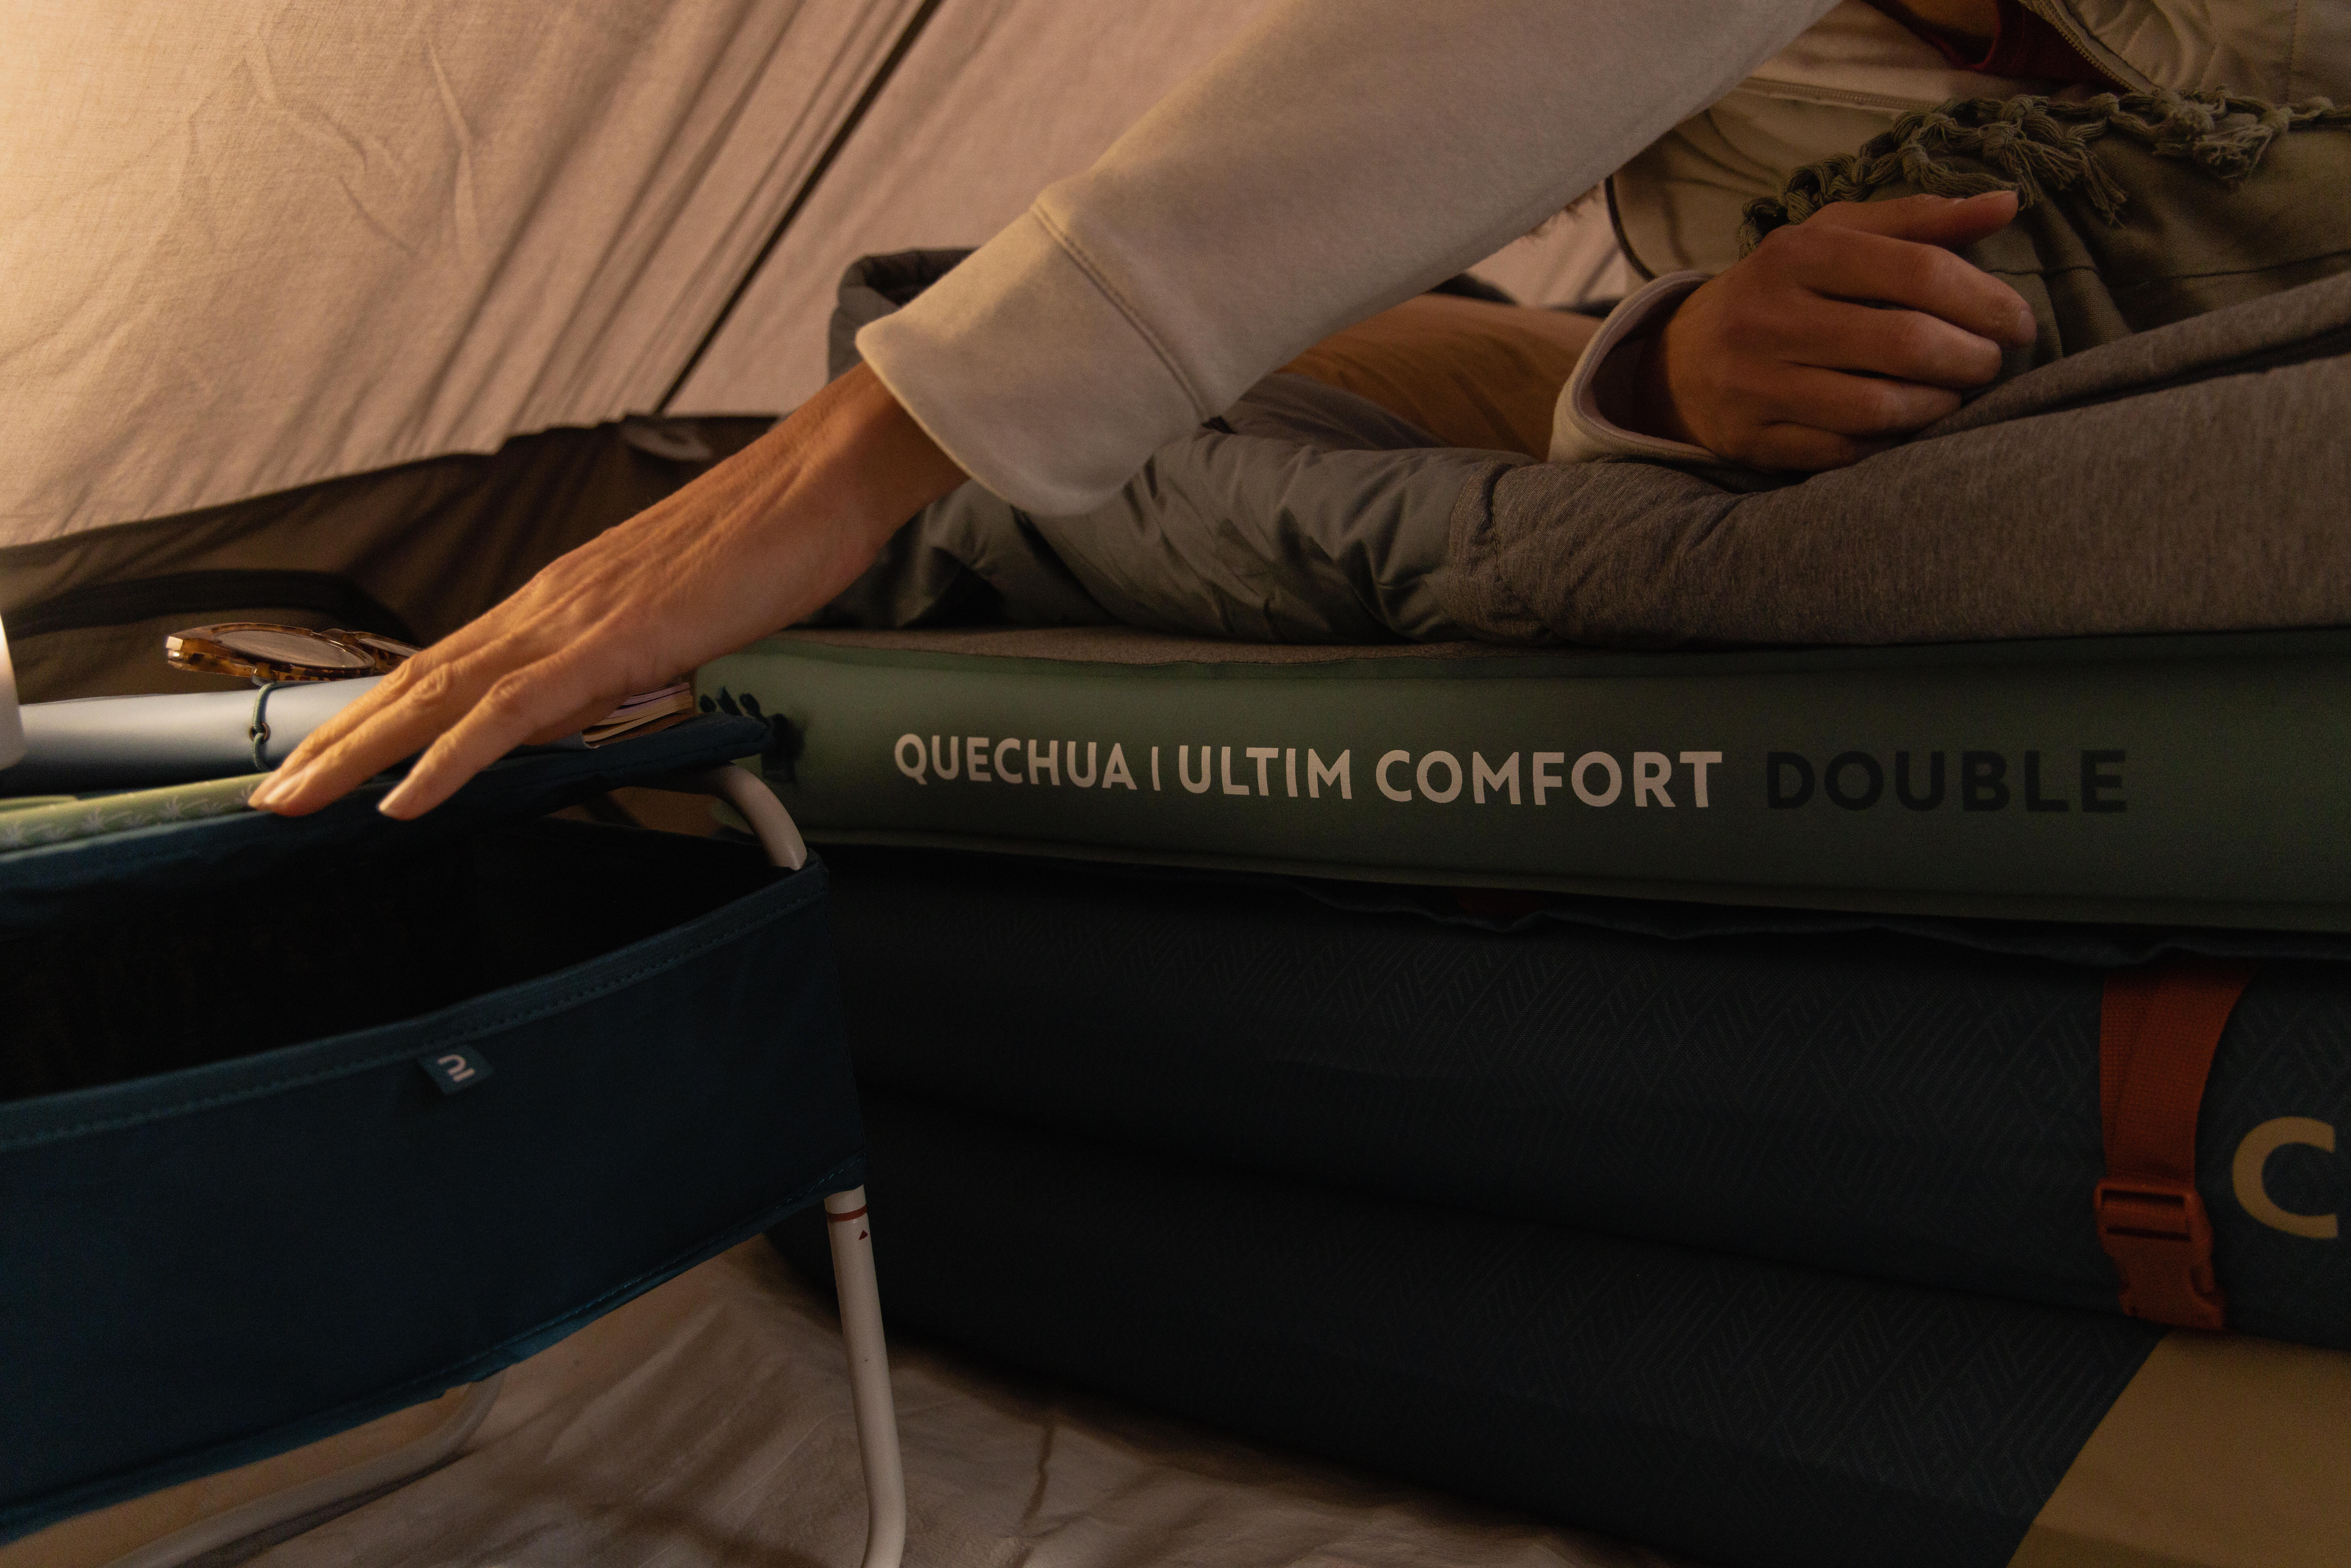 Double Camping Sleeping Mat - Ultim Comfort - QUECHUA